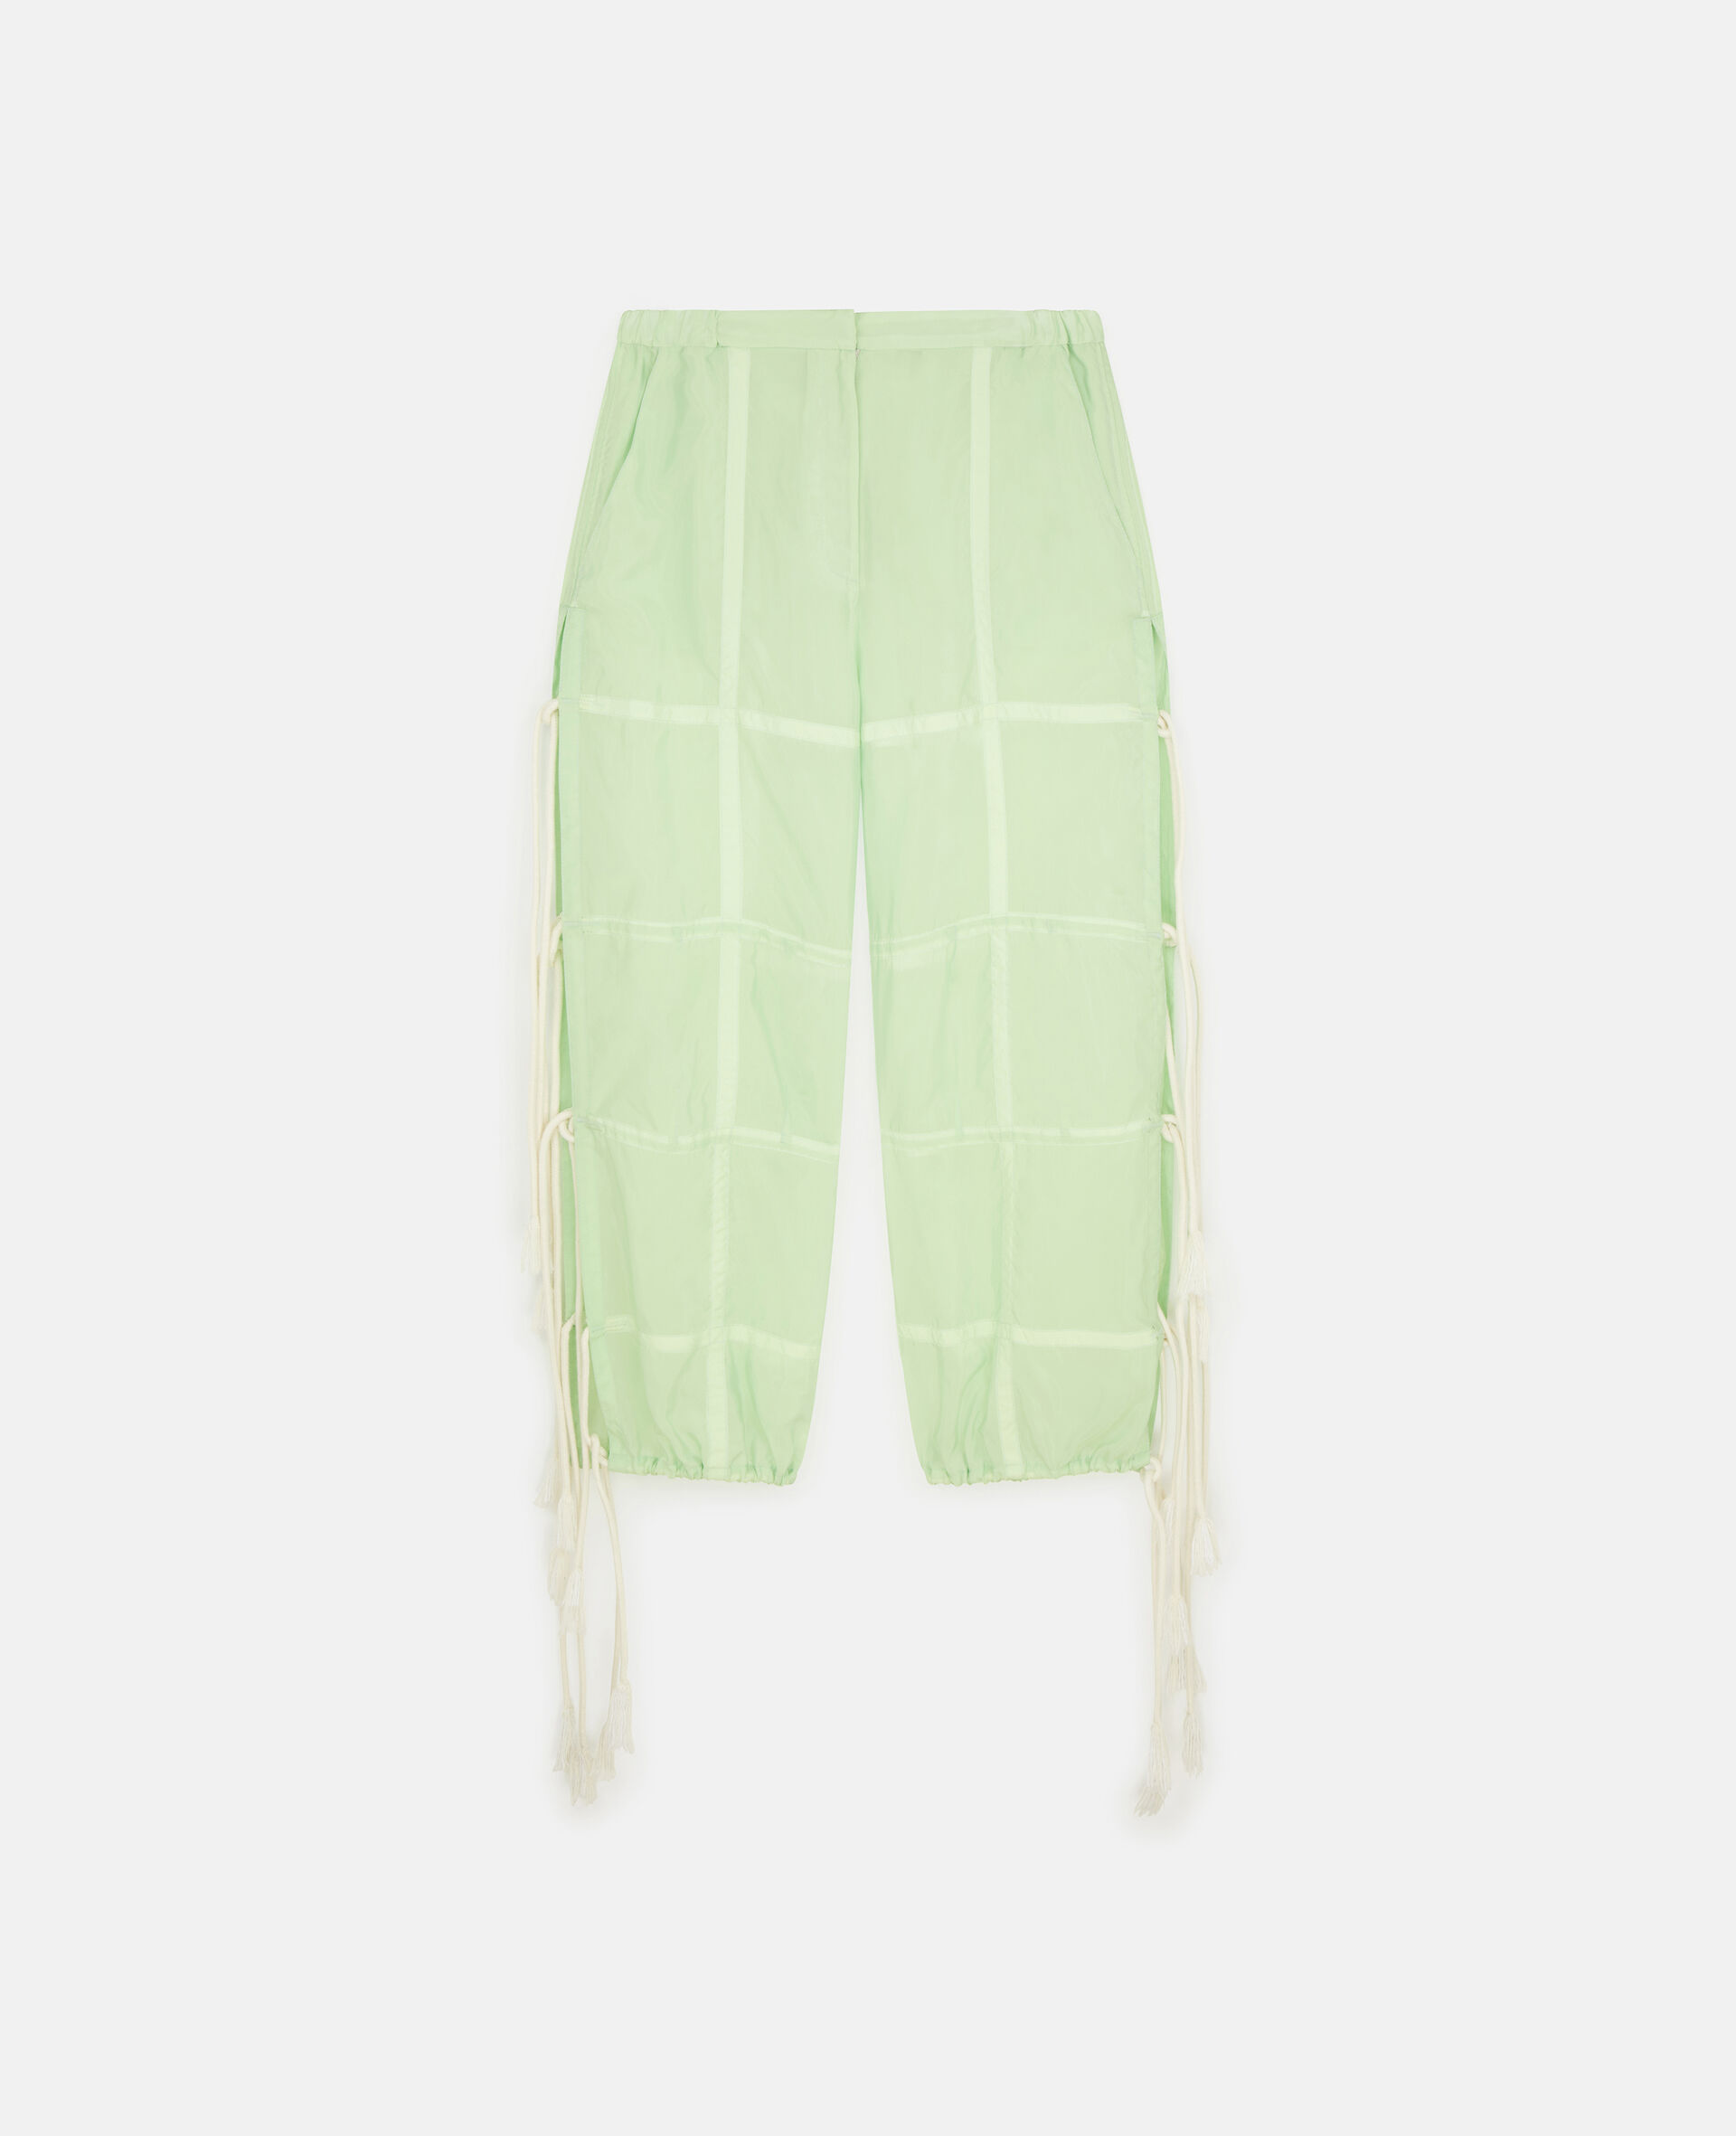 Parachute Cord Pants-Green-large